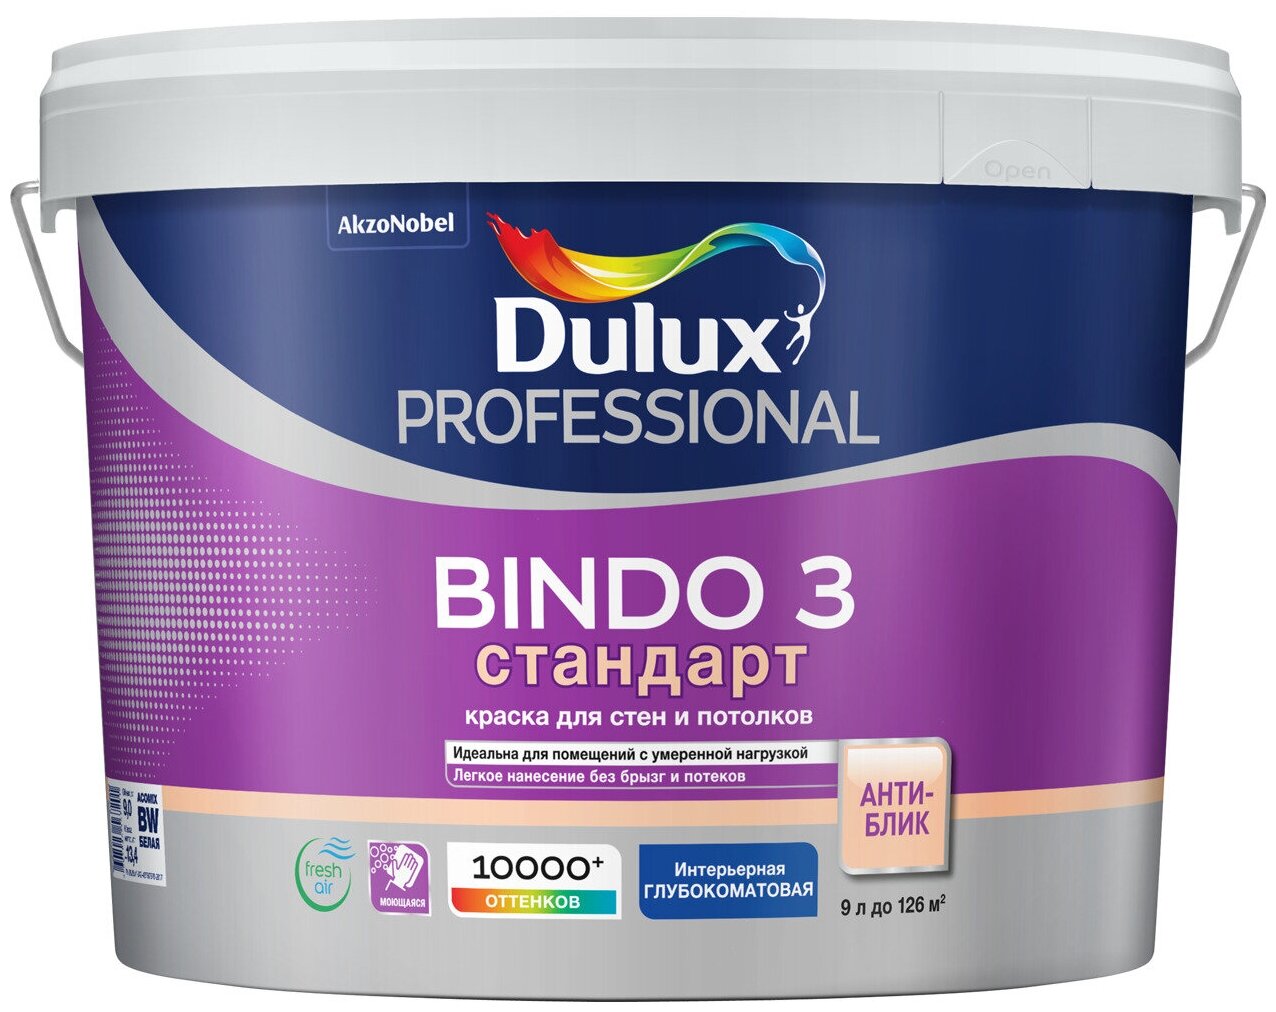 Dulux BINDO 3 / Дулюкс биндо 3, 9л, белая, светлые тона